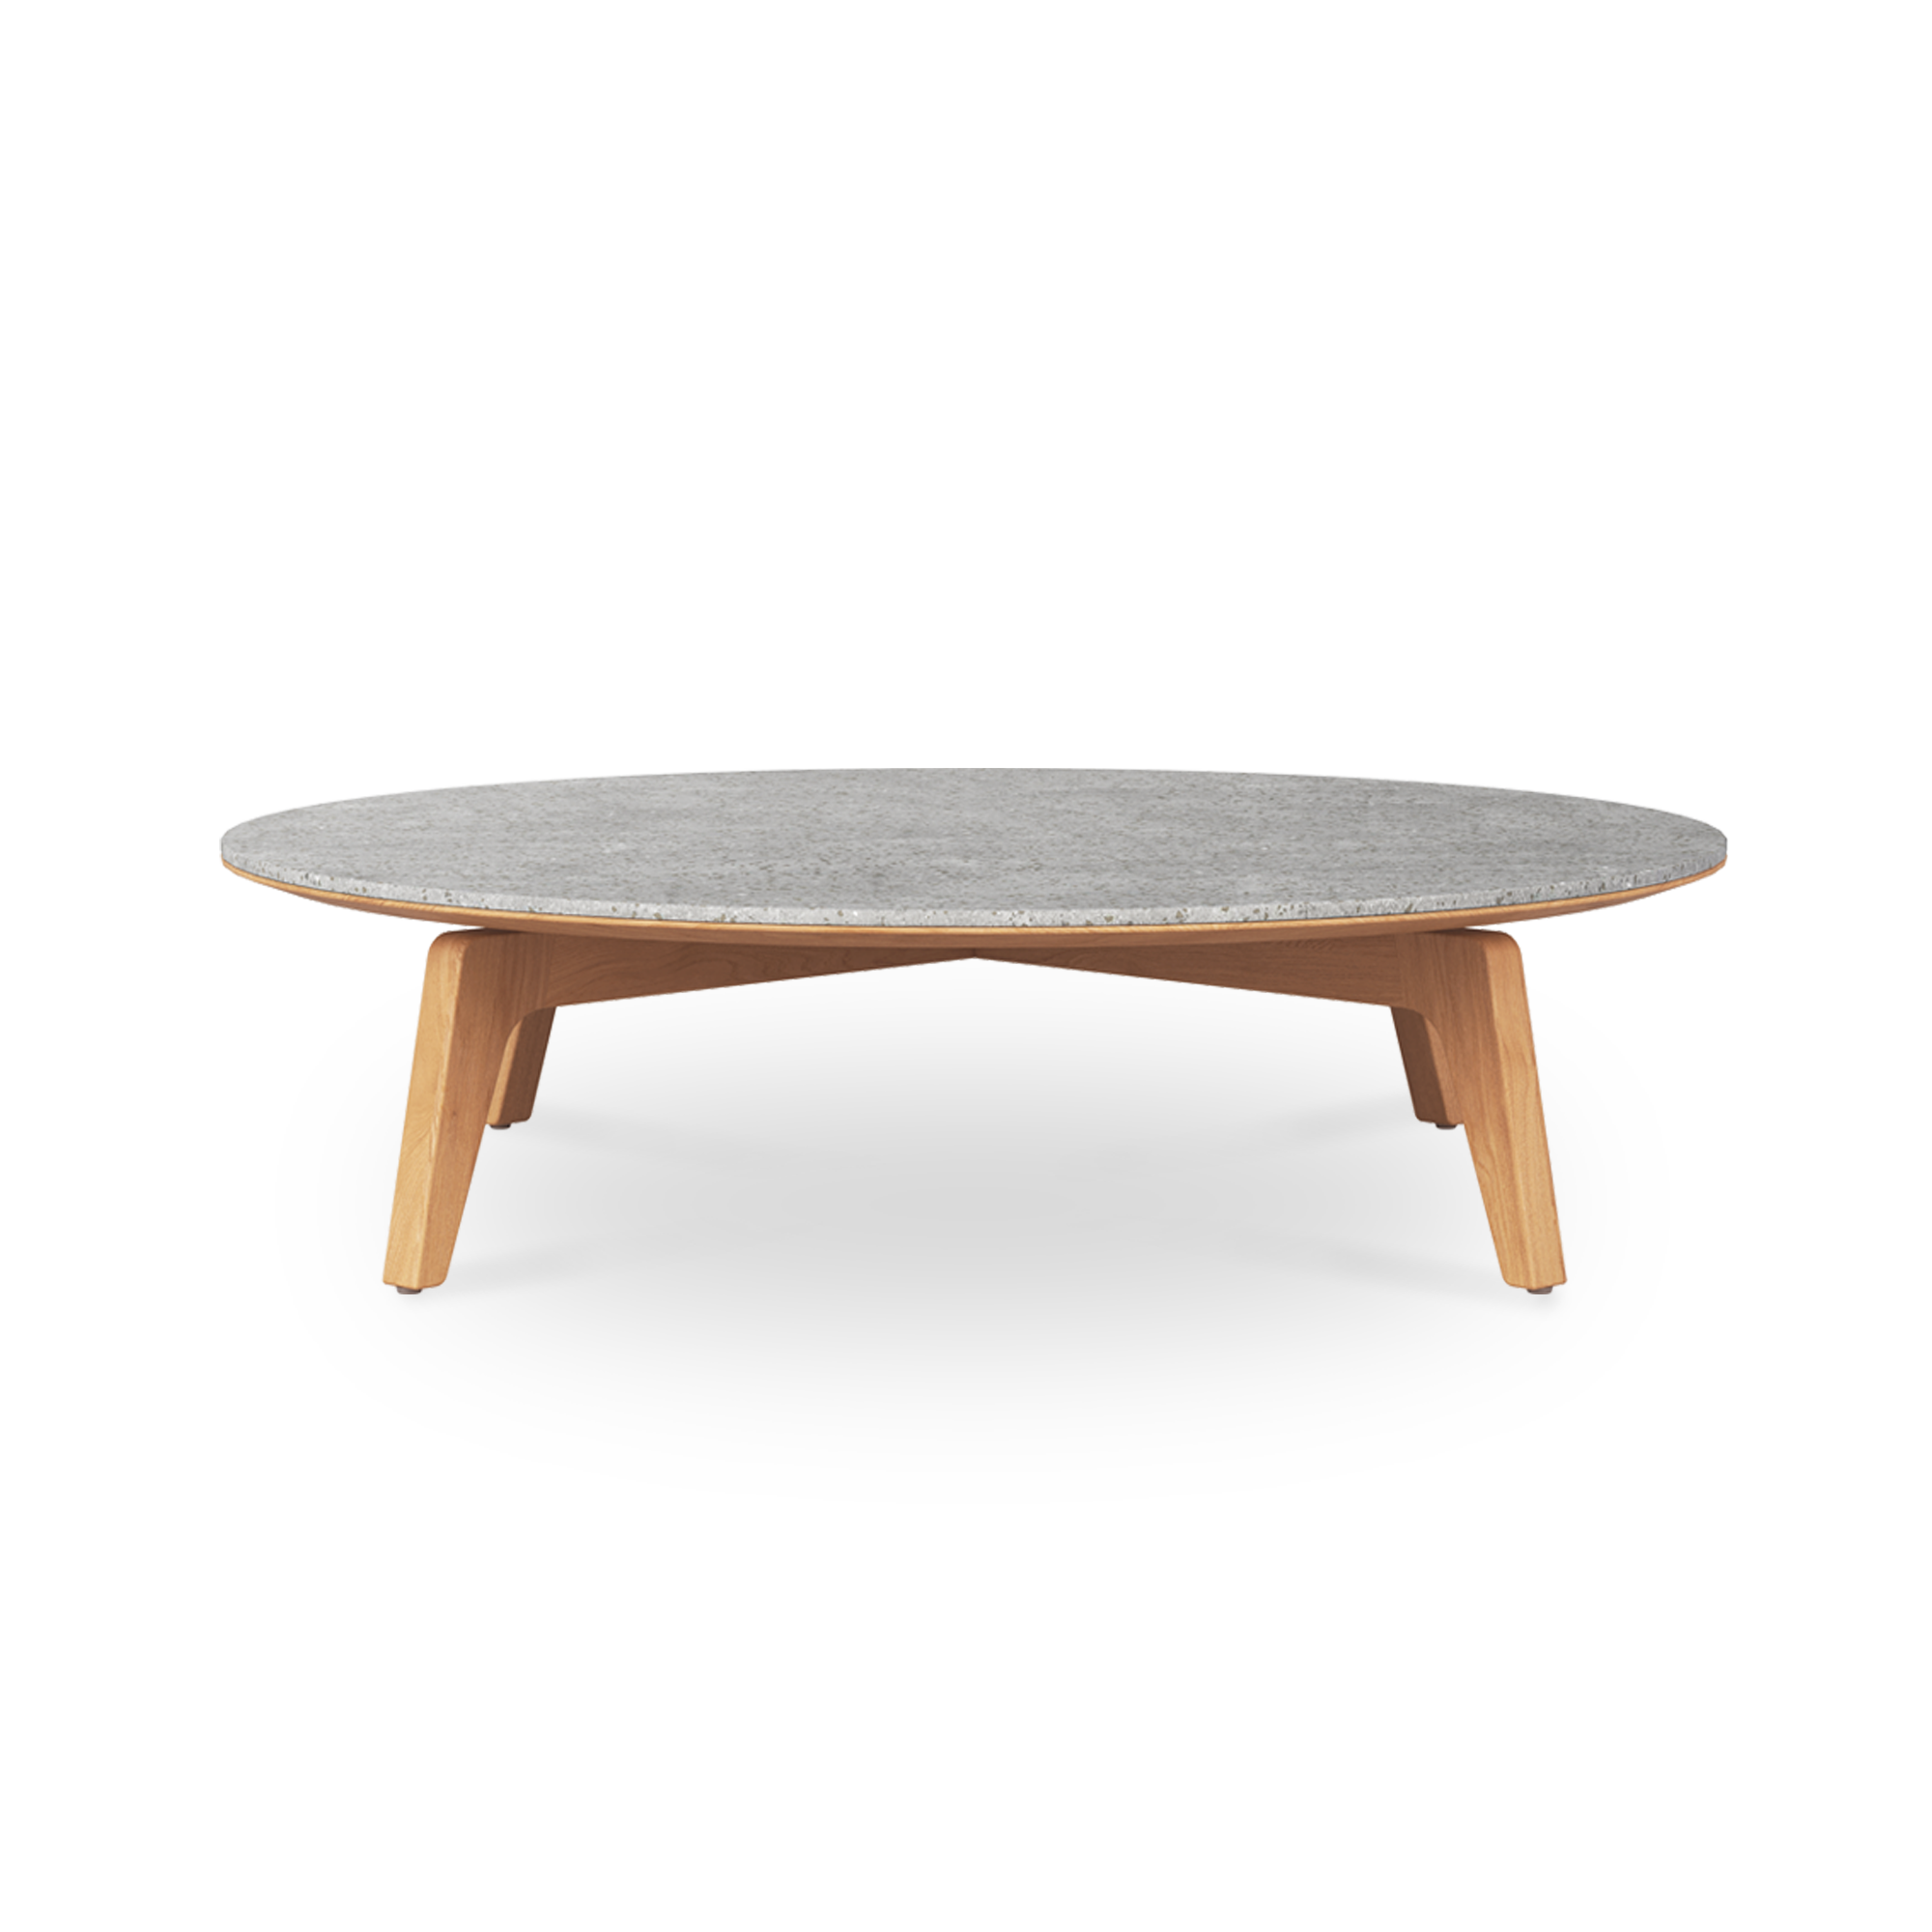 Platon Coffee Table Round Diameter 120 Ceramic Front